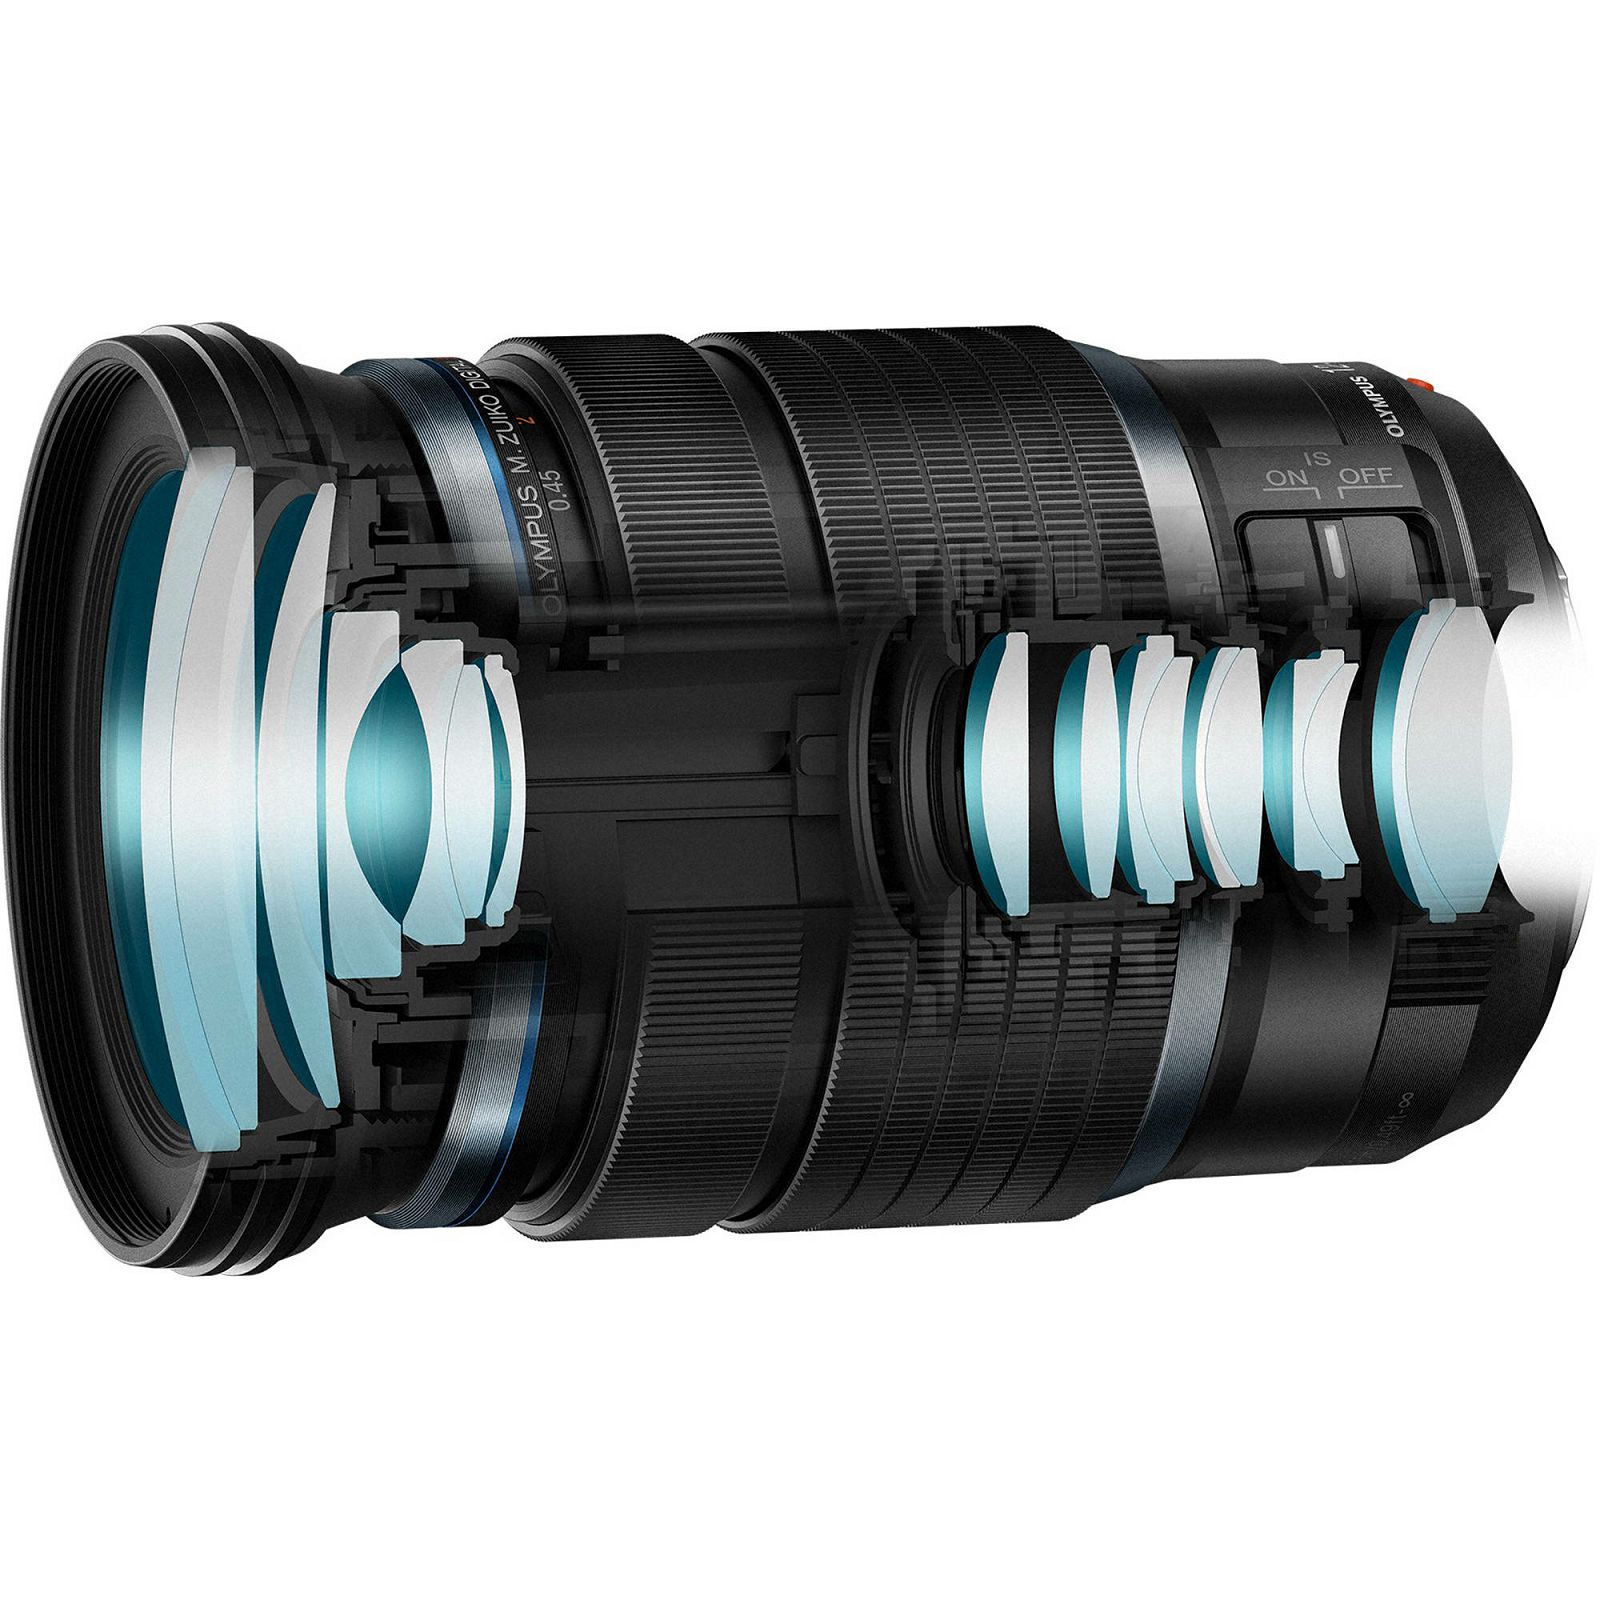 Olympus M. Zuiko Digital 12-100mm f/4 ED IS PRO Allround objektiv EZ-M1210PRO 12-100 1:4.0 f4 zoom lens Micro Four Thirds MFT micro4/3" (V314080BW000)